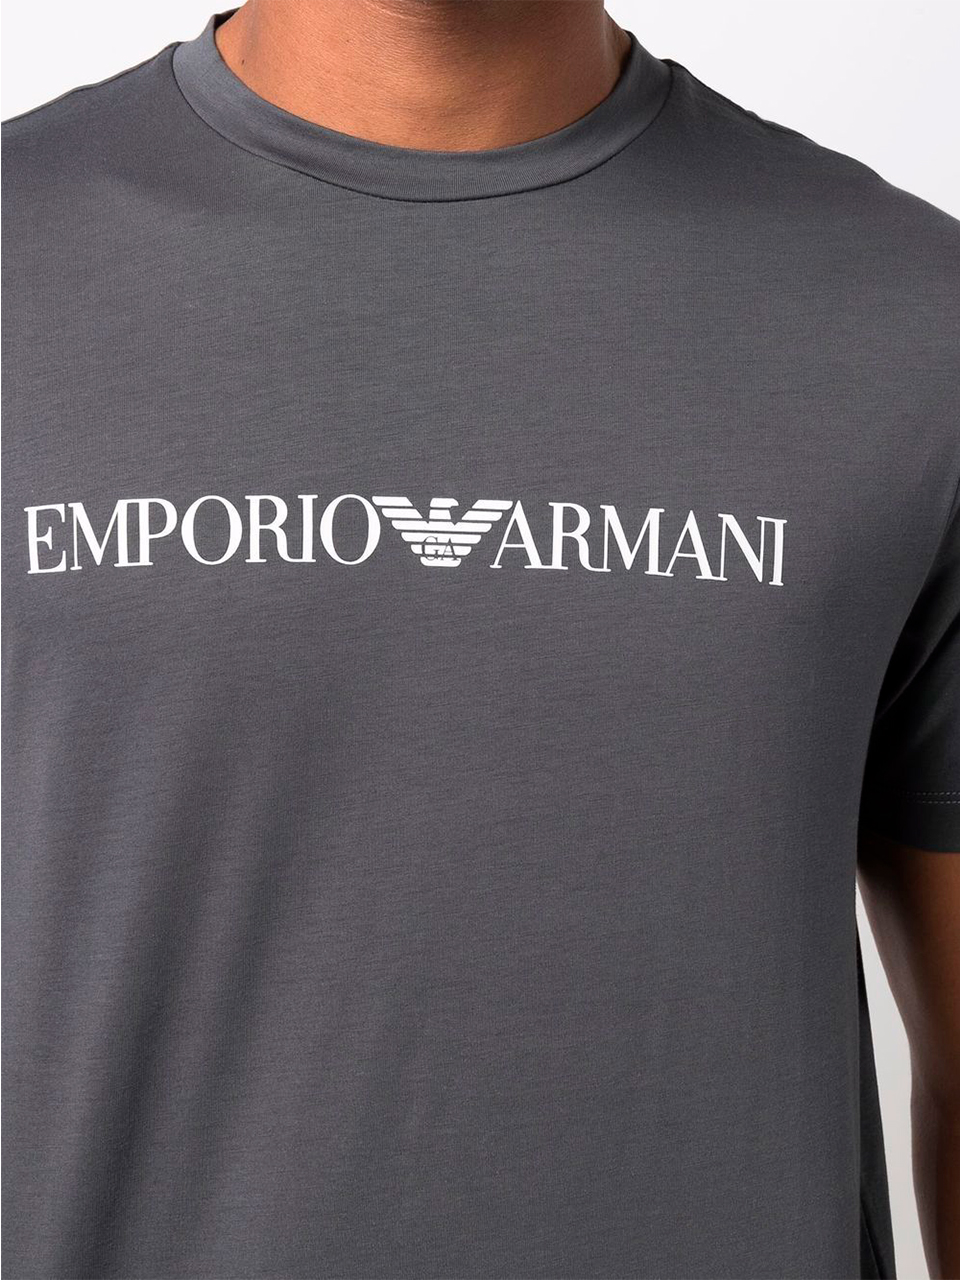 Imagem de: Camiseta Emporio Armani Cinza Escuro com Logo Branco